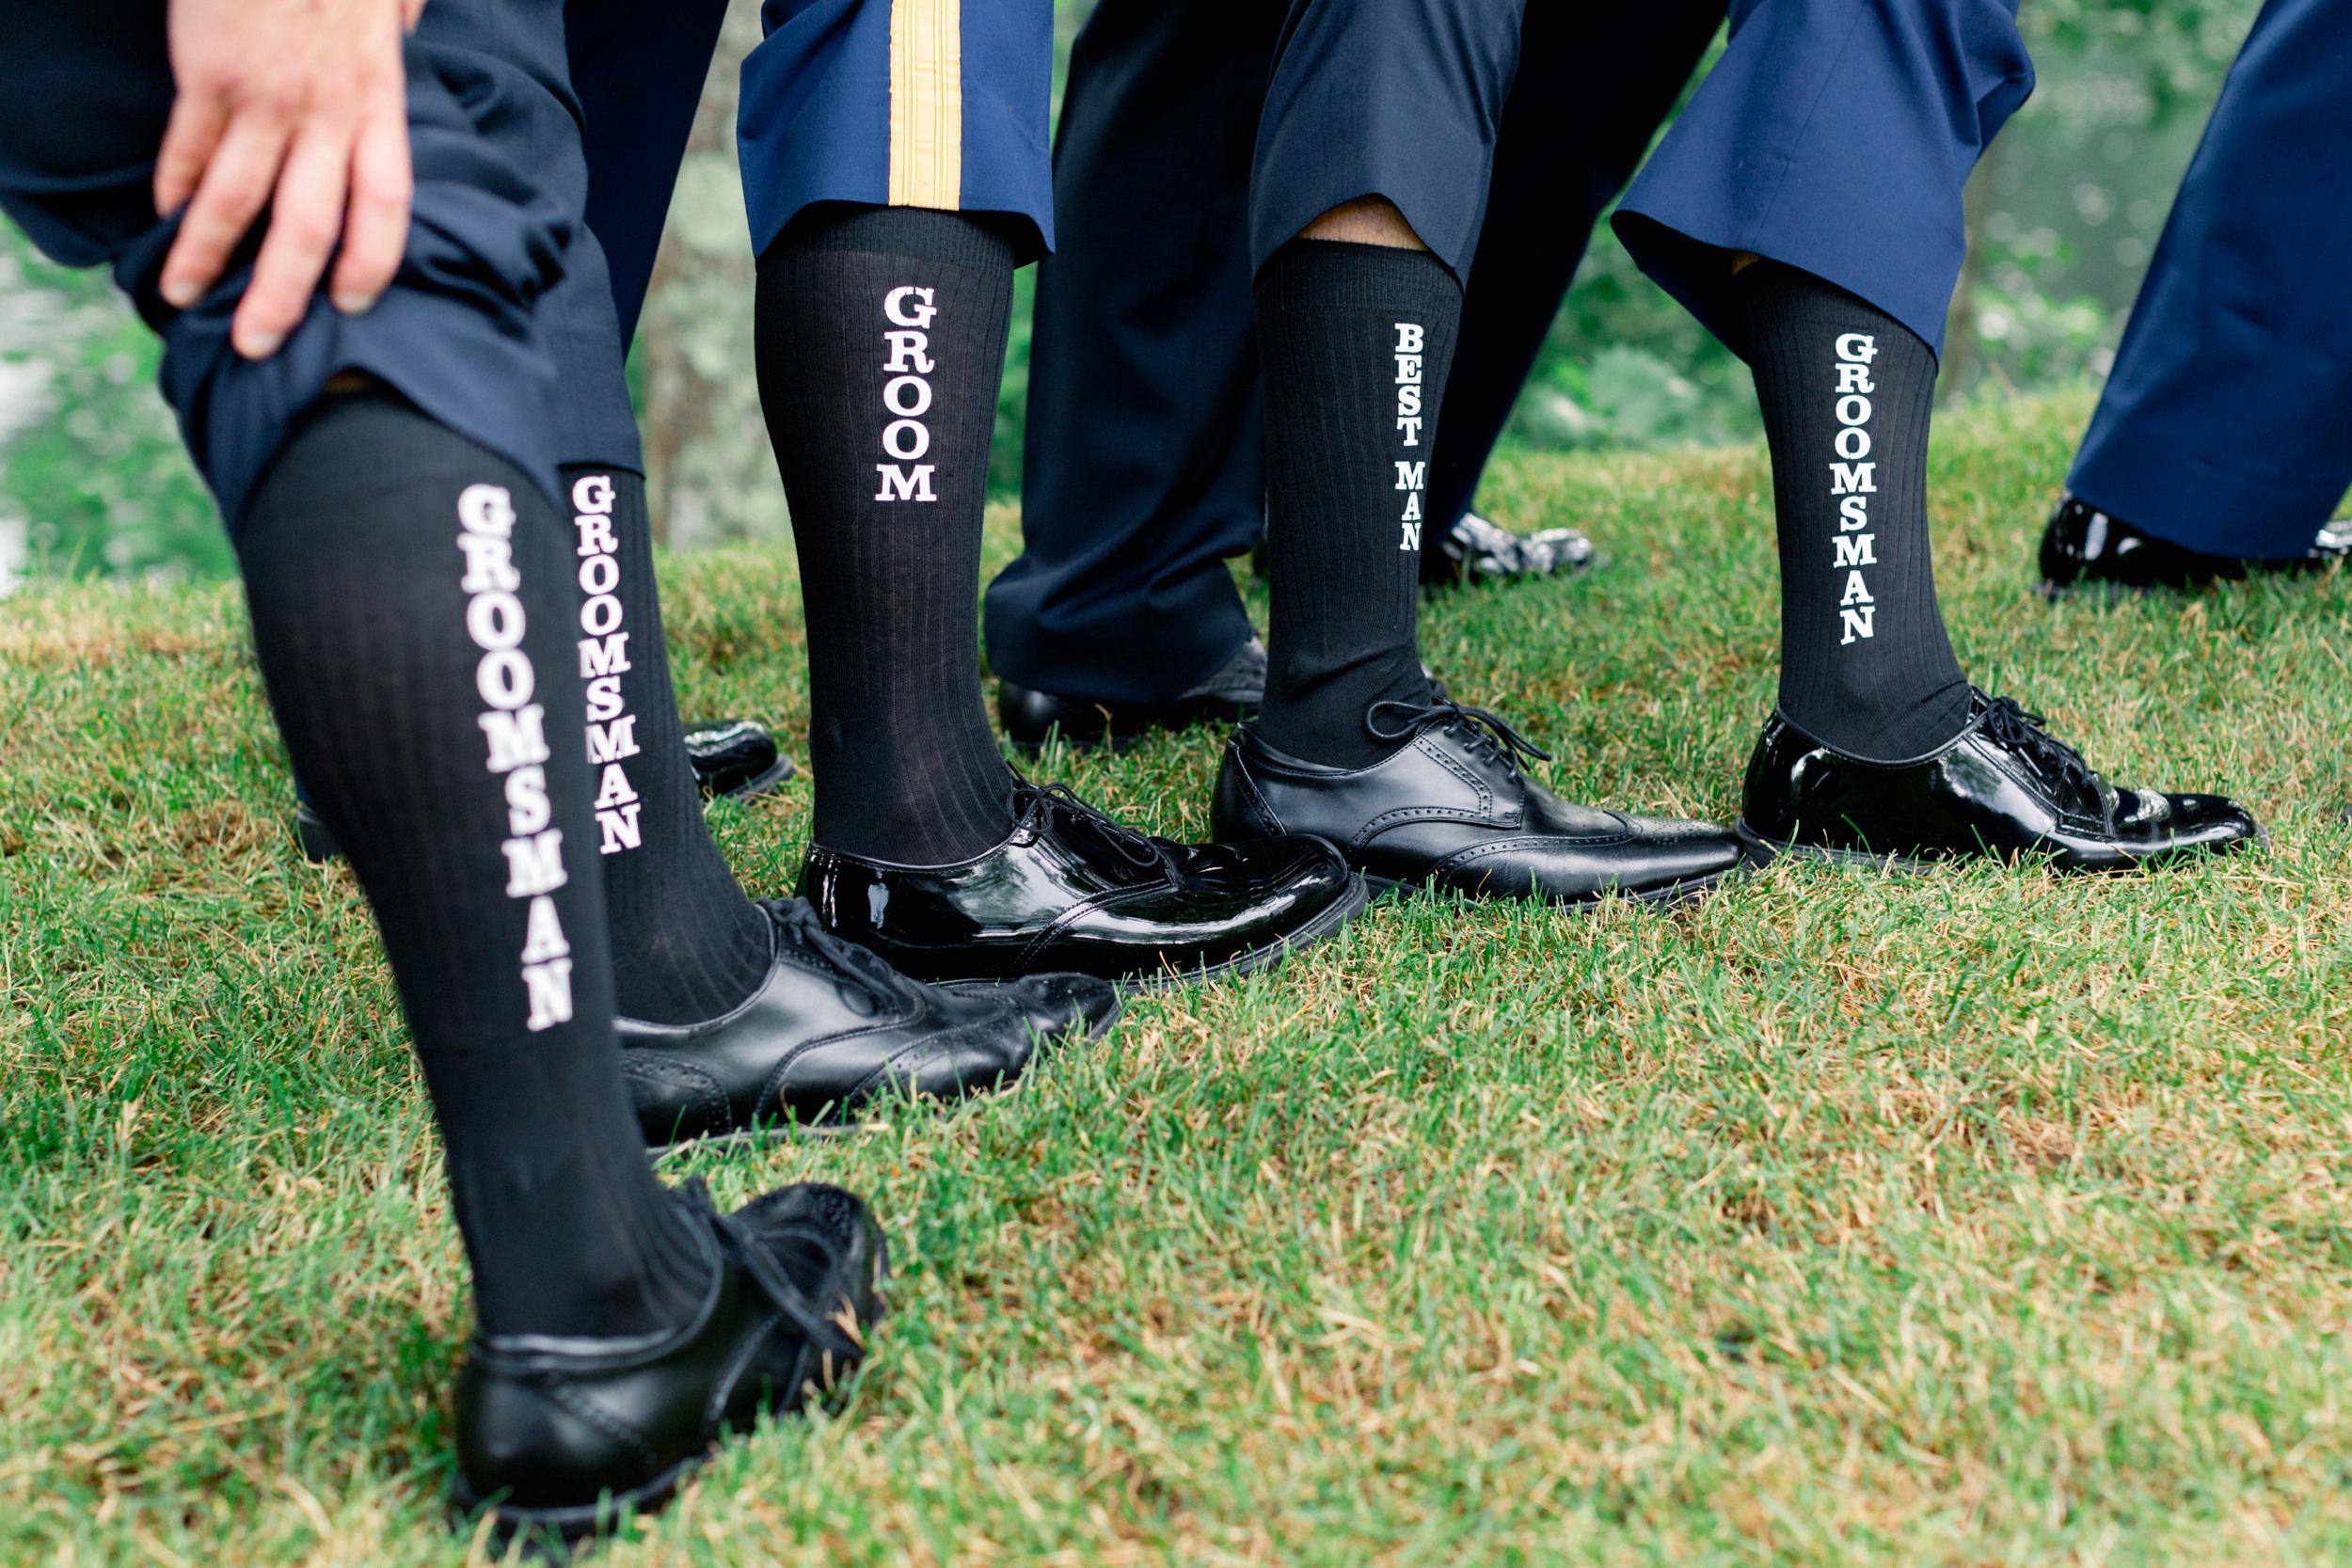 groomsmen socks with military uniforms